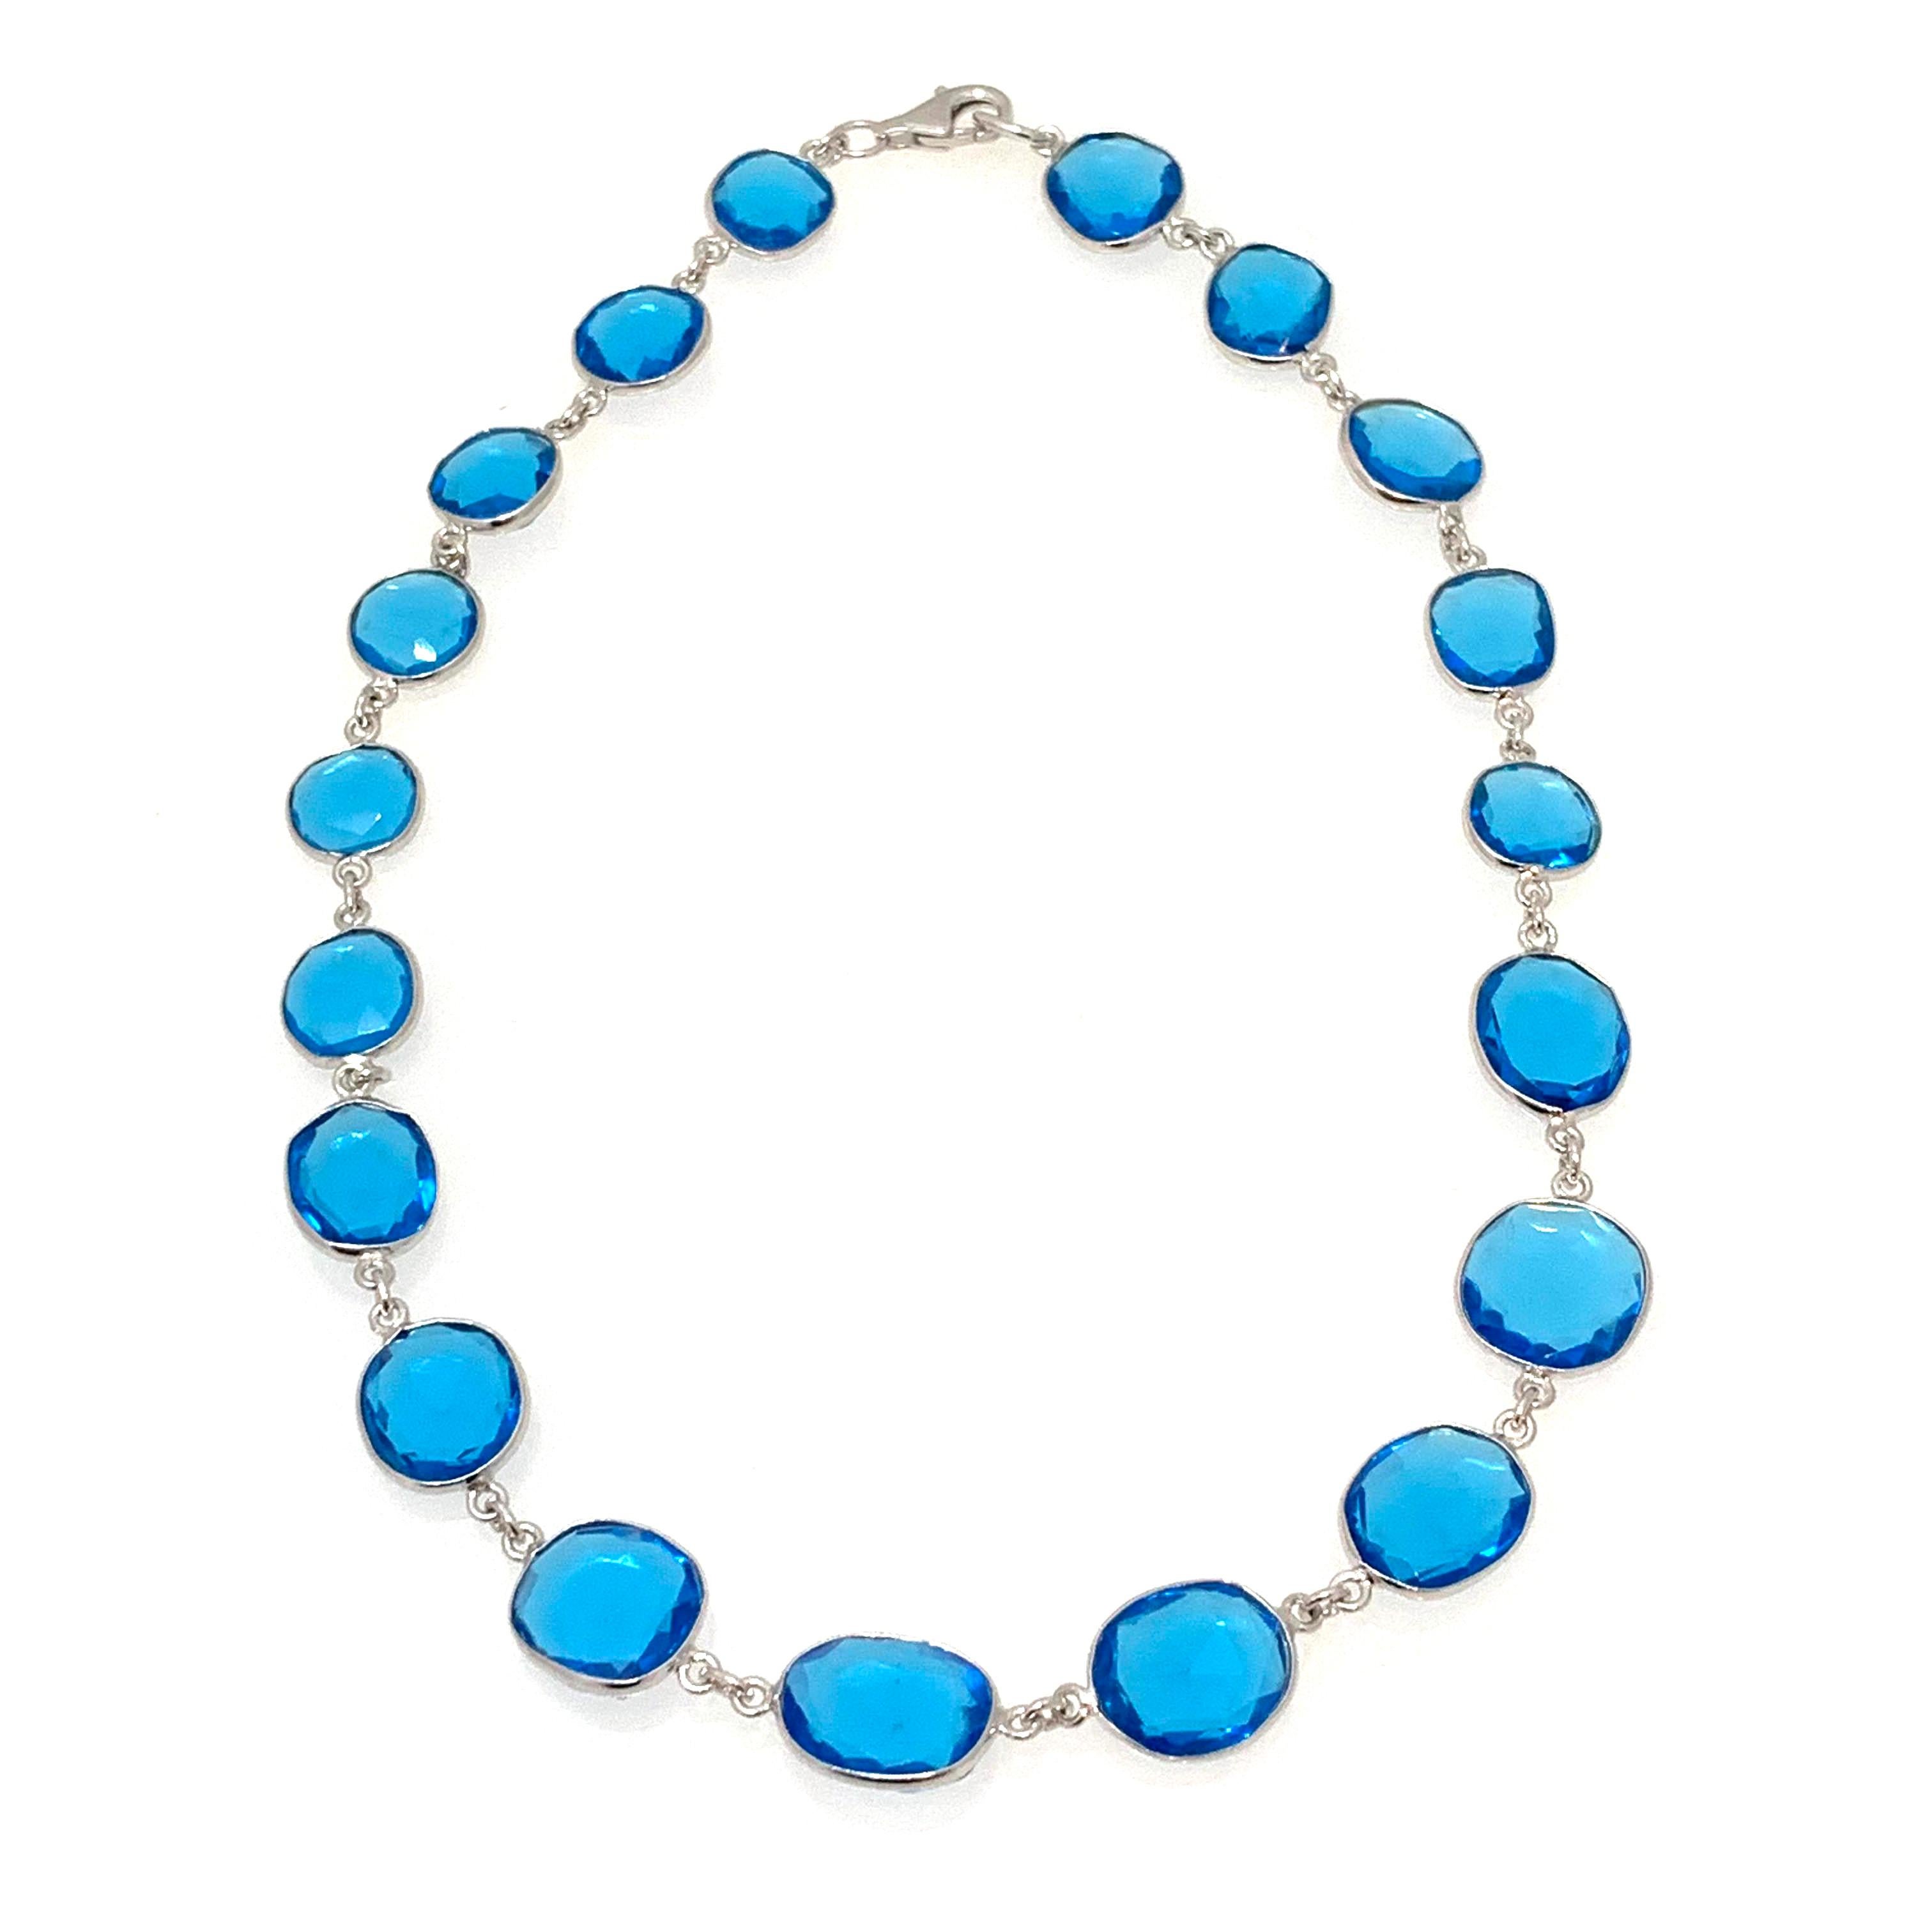 Check out this stunning Swiss blue quartz sterling silver necklace!

This elegant necklace features 19 pcs of unique shape rose cut swiss blue hydroquartz. Each piece measures 12-13mm (1/2